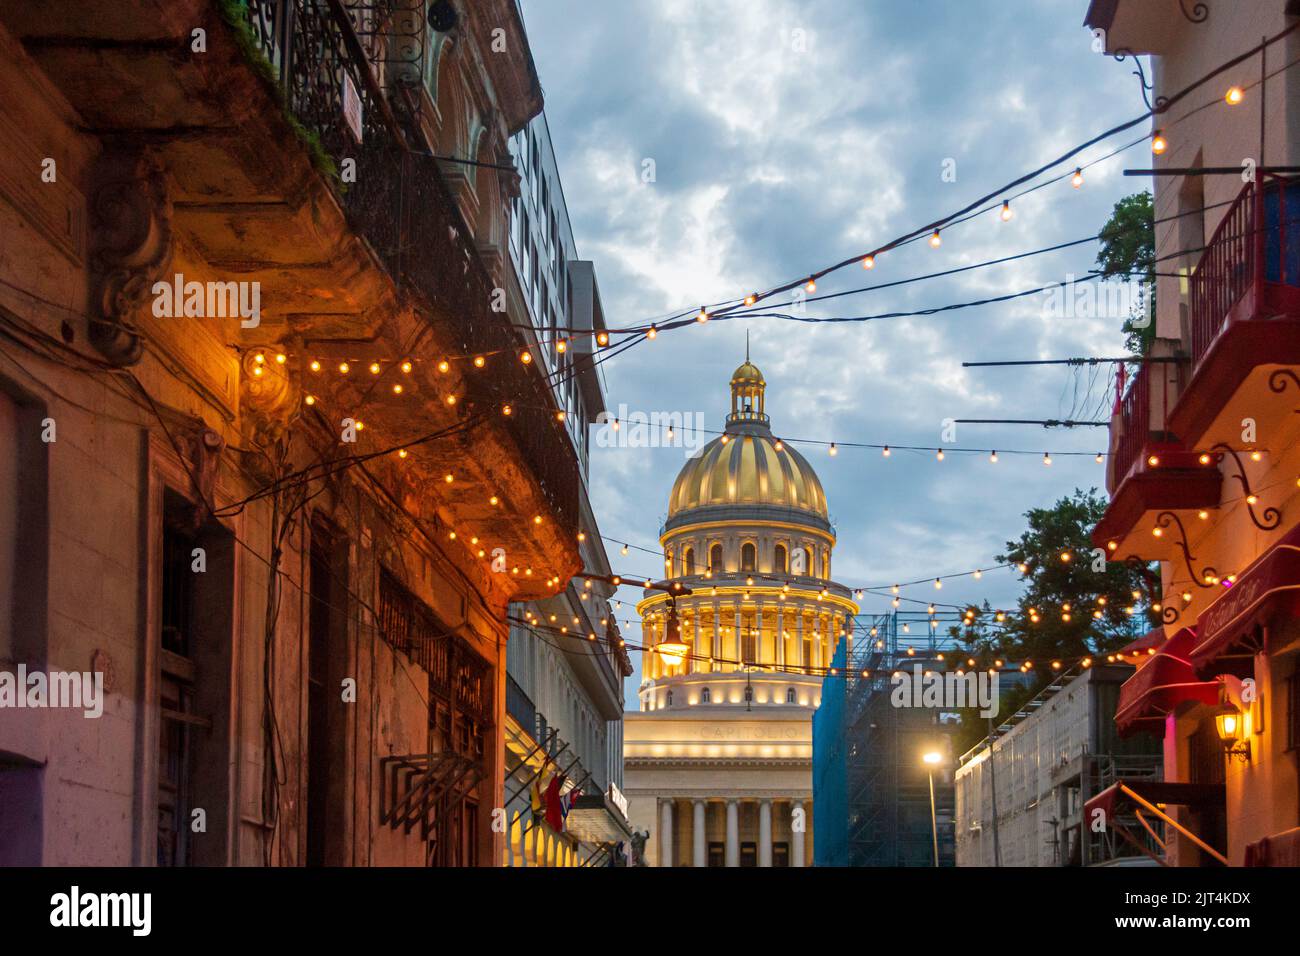 An image of Havana, Cuba's iconic Capital building located in downtown Havana, Cuba. Stock Photo